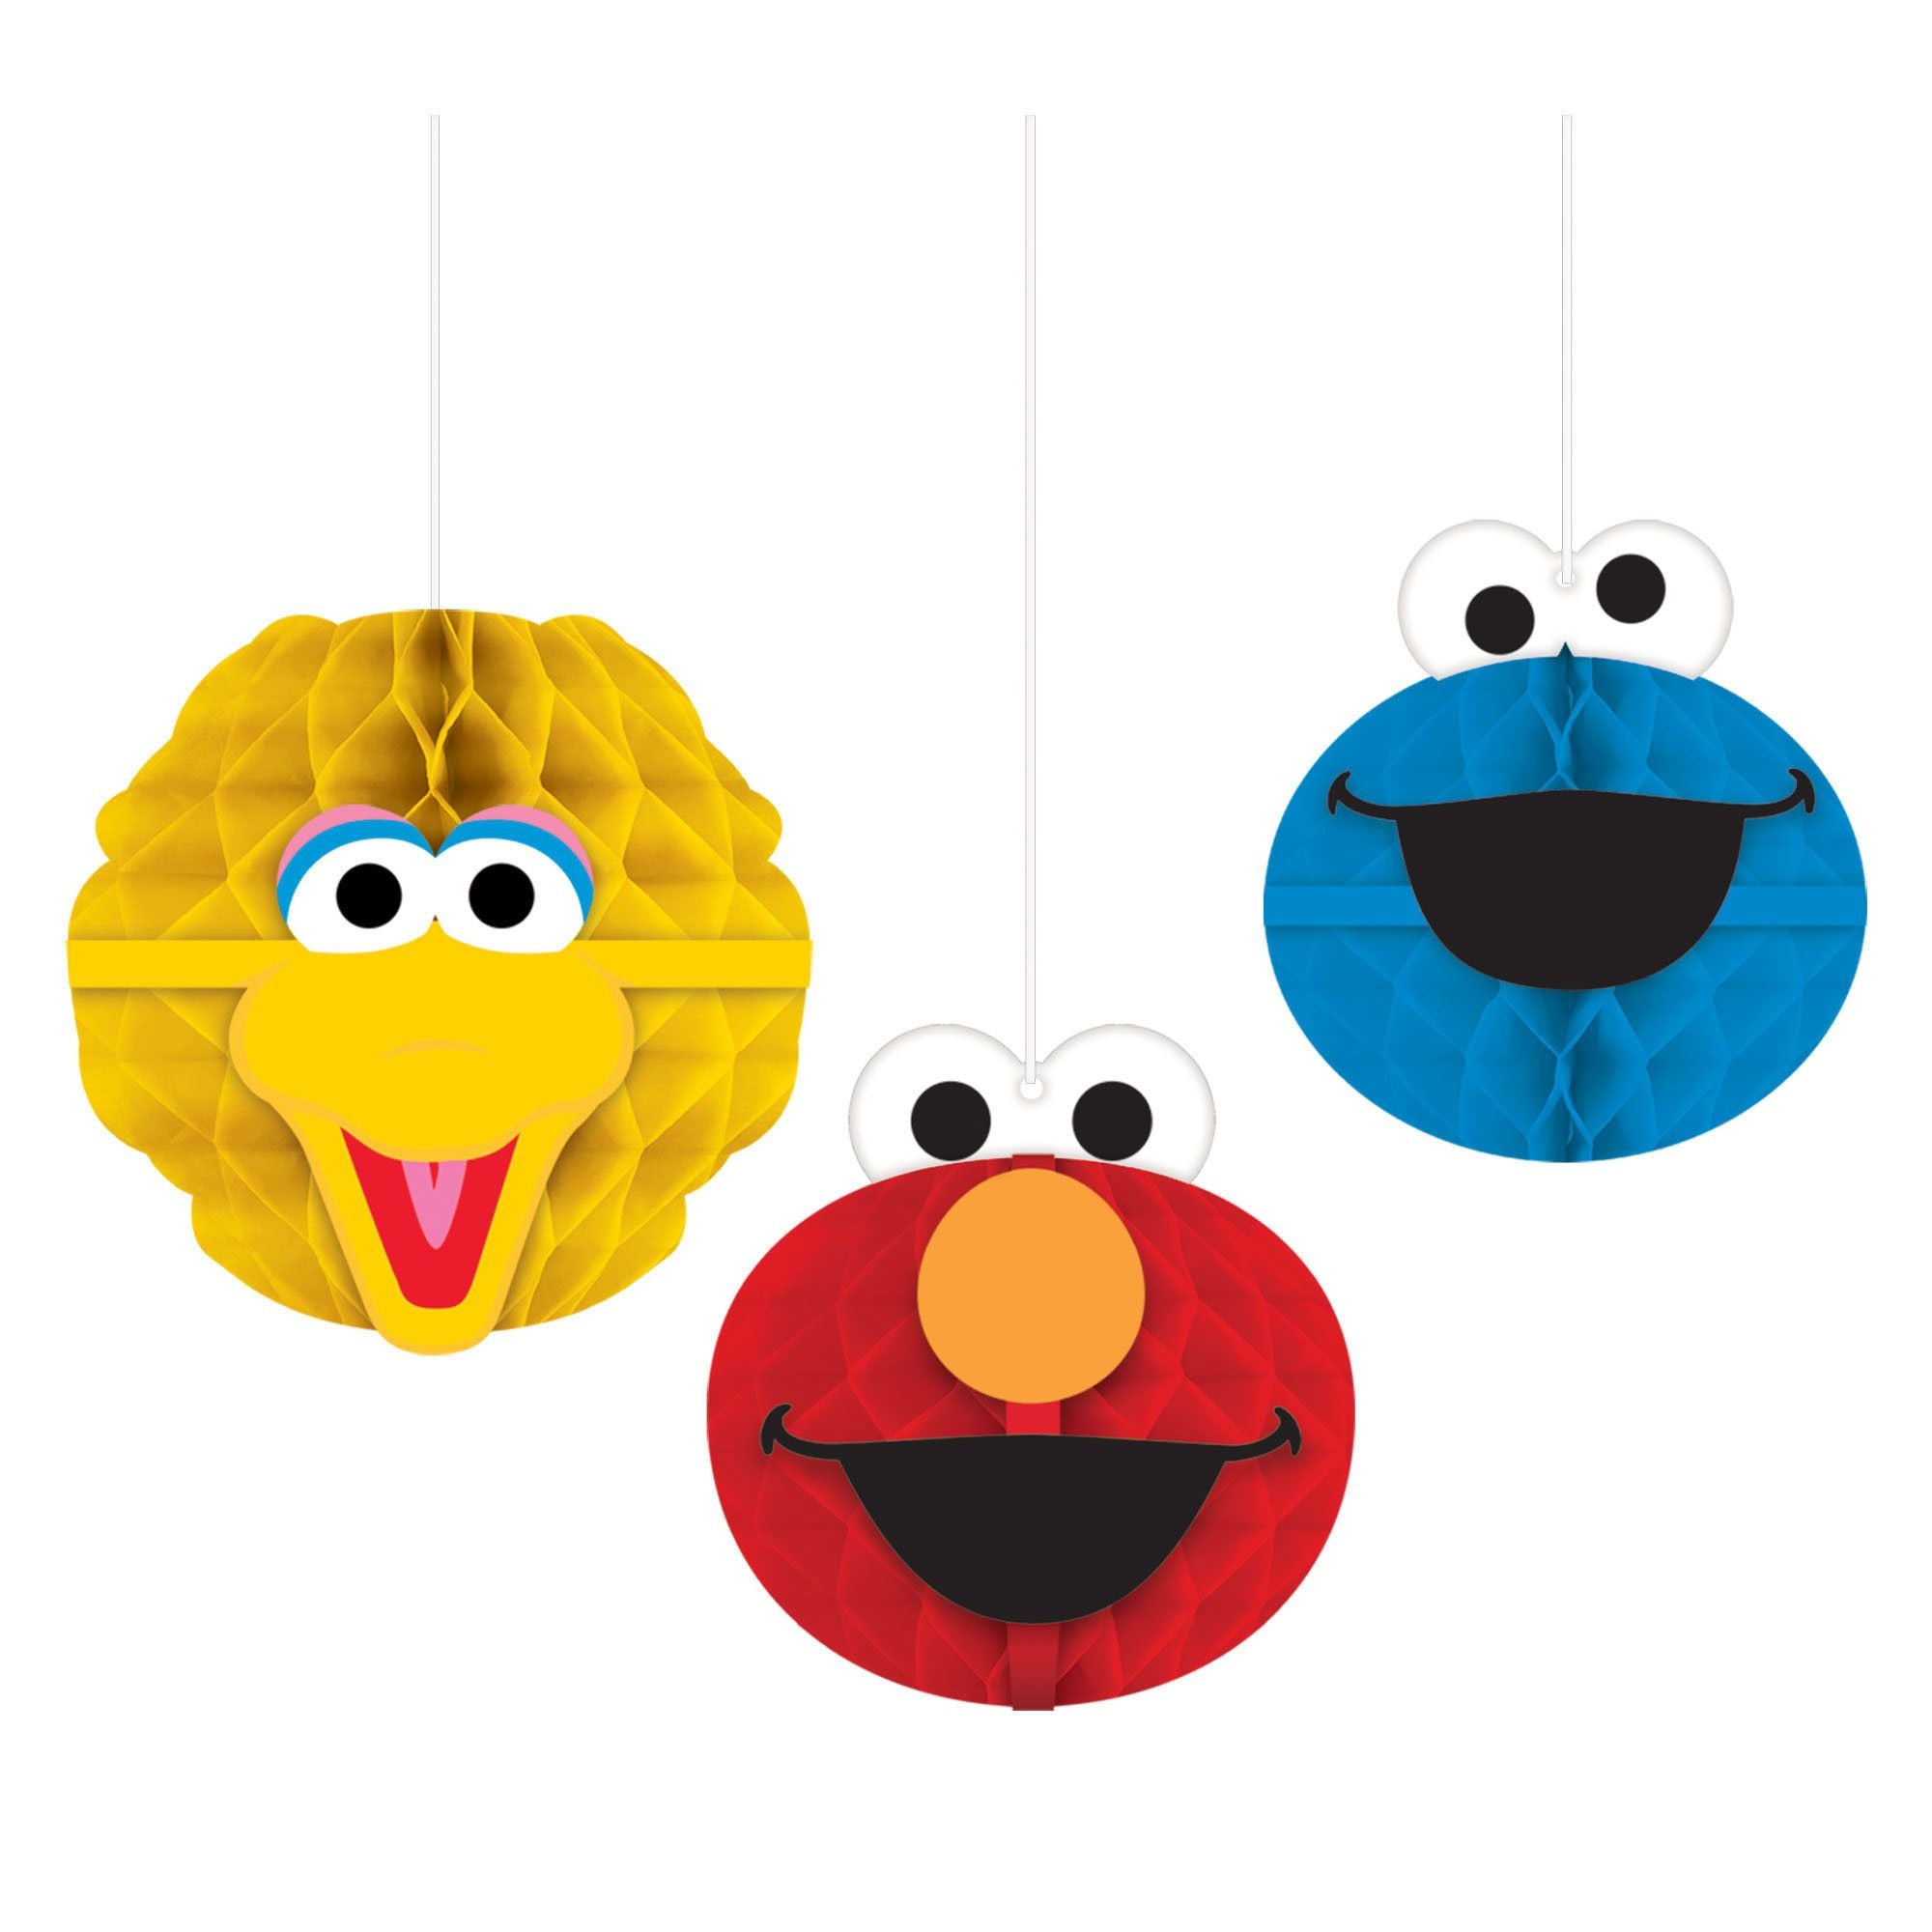 Elmo, Cookie Monster and Big Bird